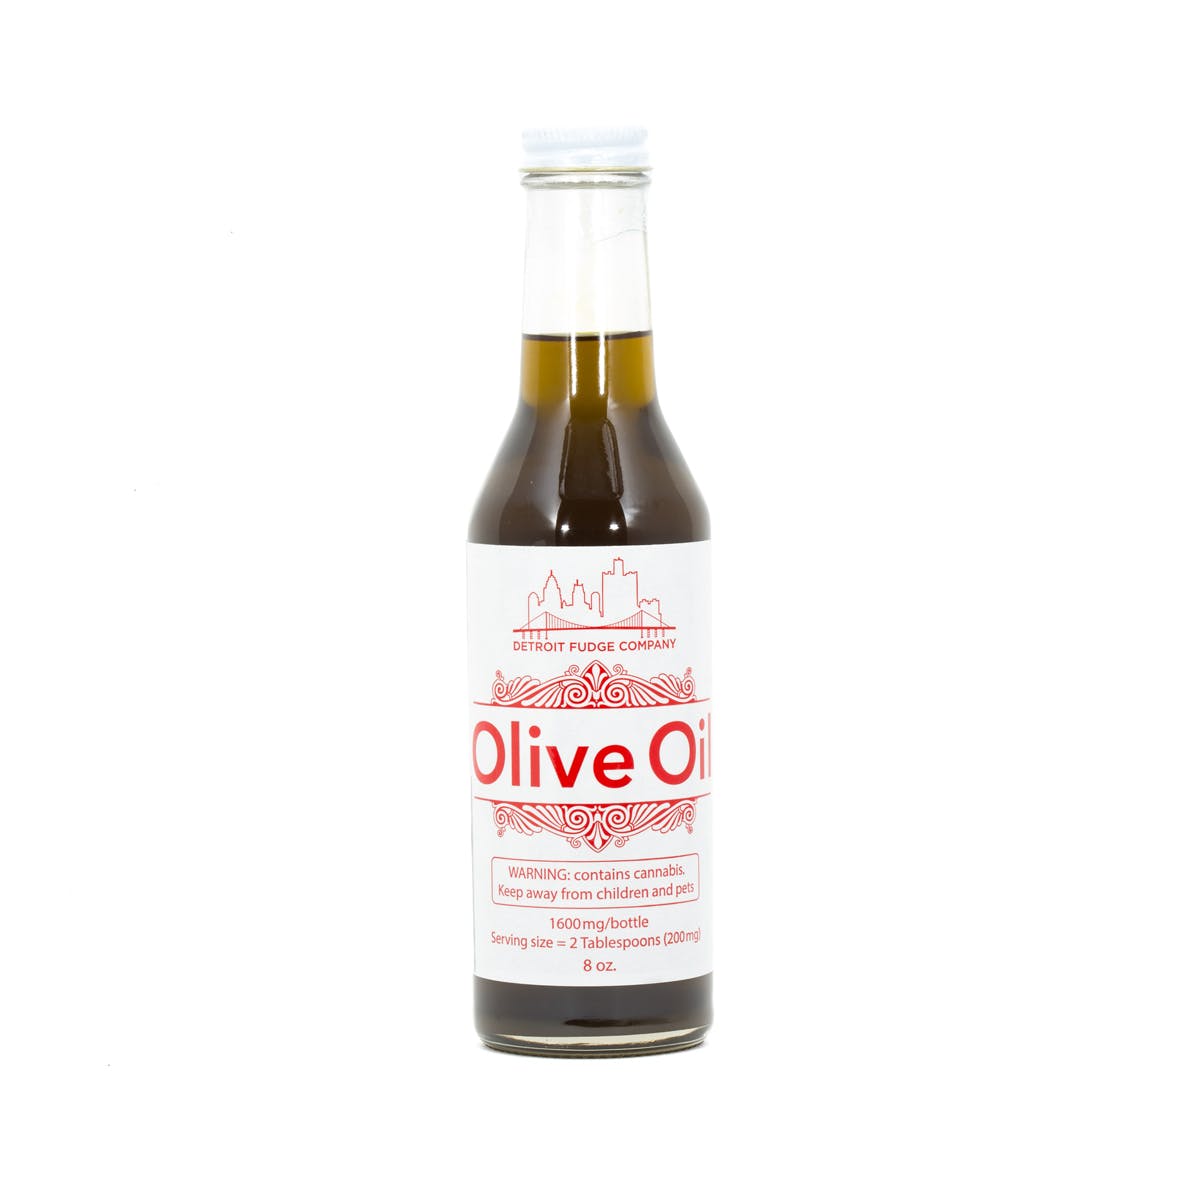 edible-detroit-fudge-company-olive-oil-200mg